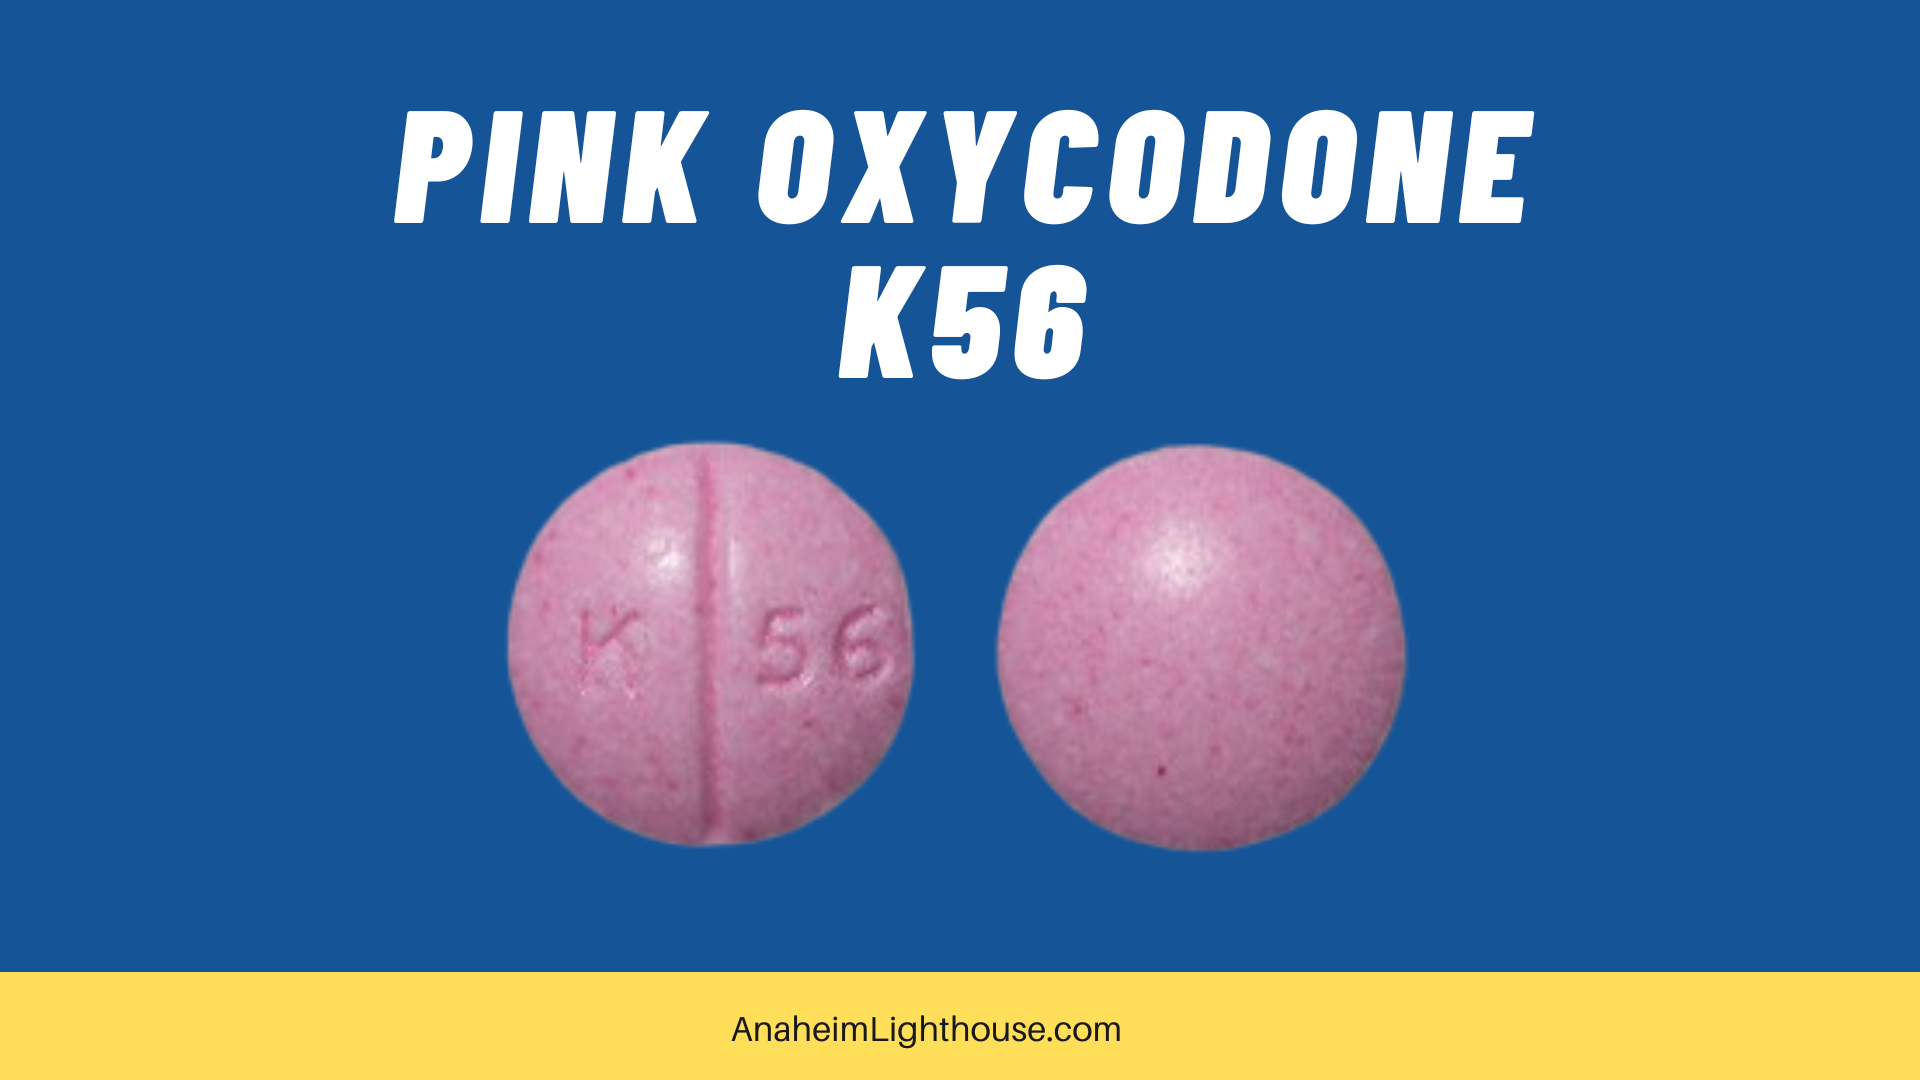 Photo of K56 pink oxycodone